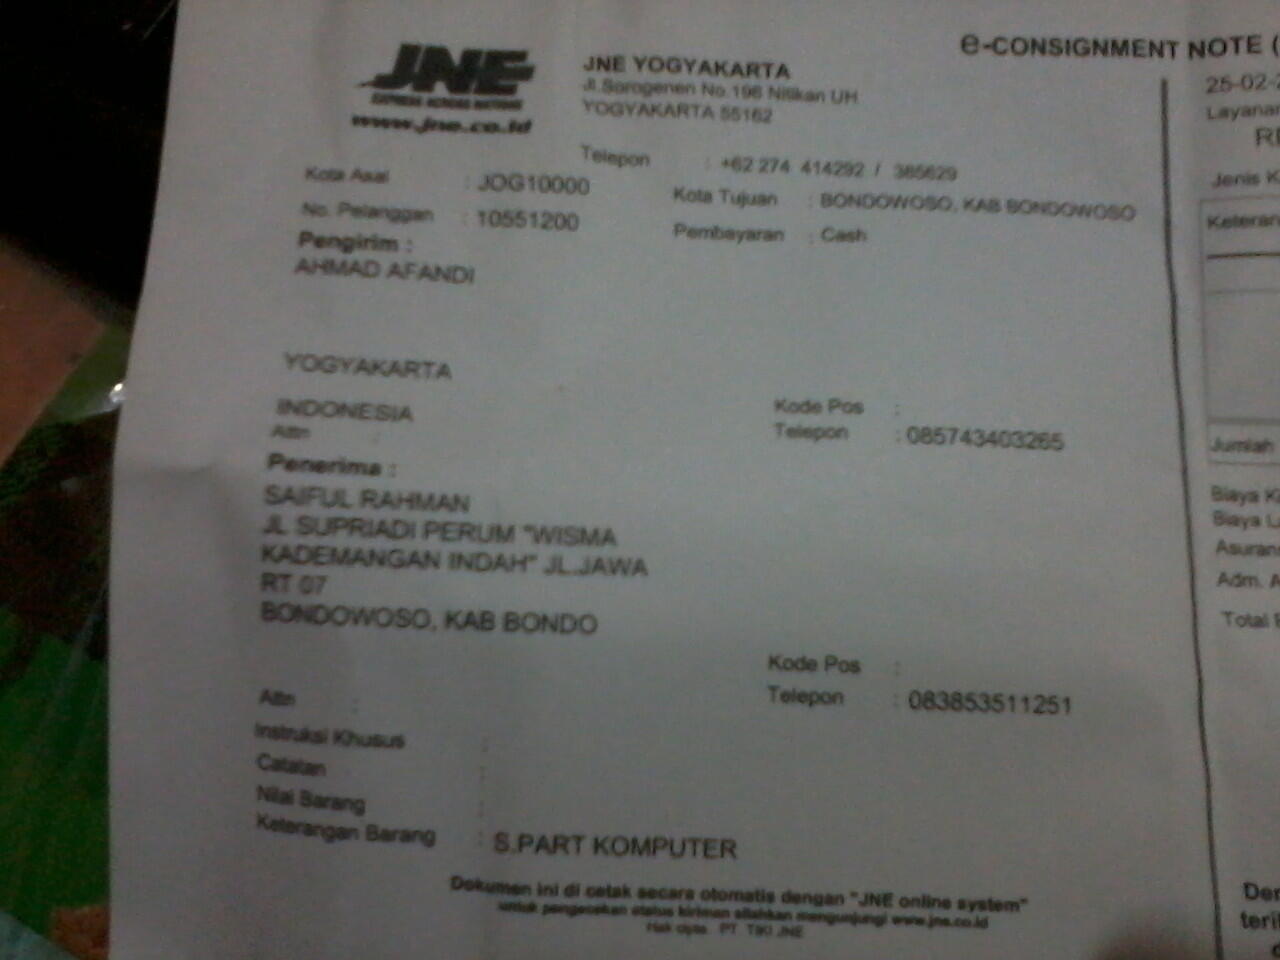 HELP ME!!! Kasus Penipuan 25 Feb 14 dari Yogyakarta ke Bondowoso